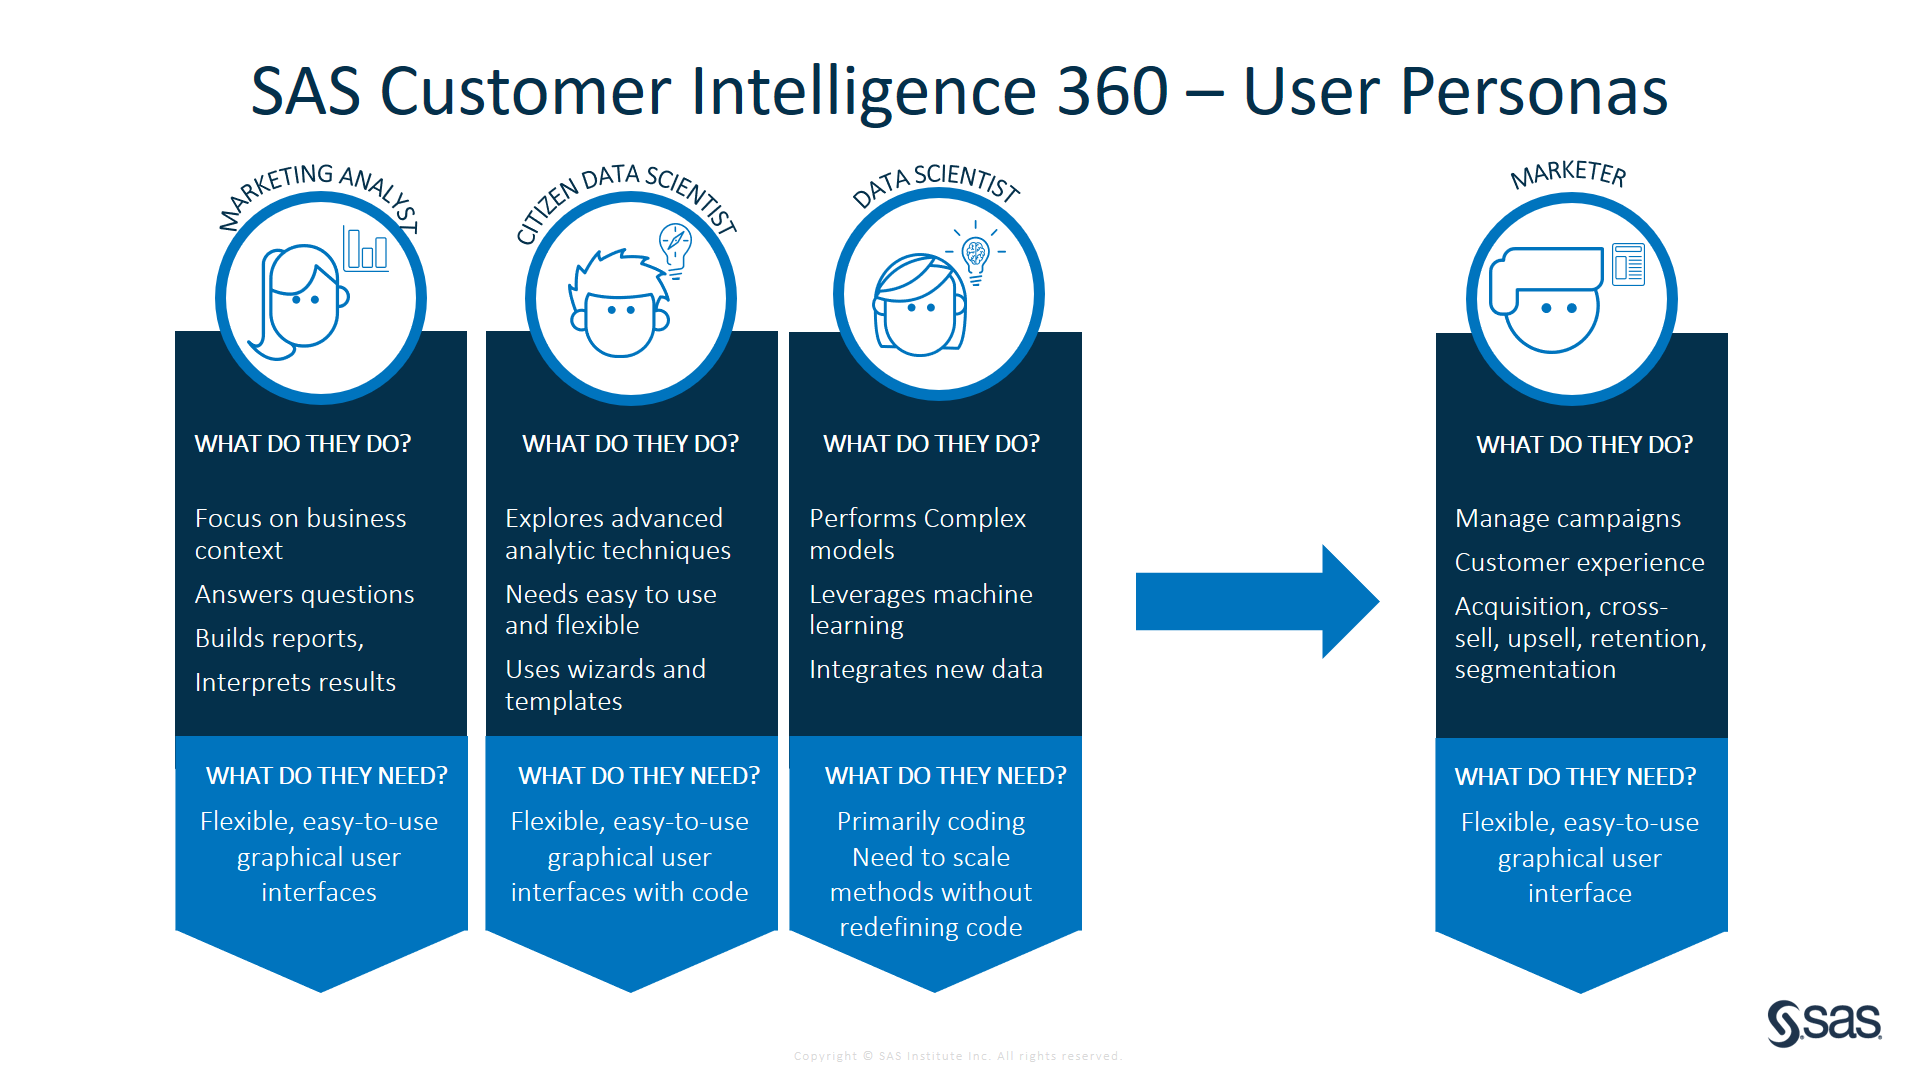 Picture of SAS Customer Intelligence 360 tools.